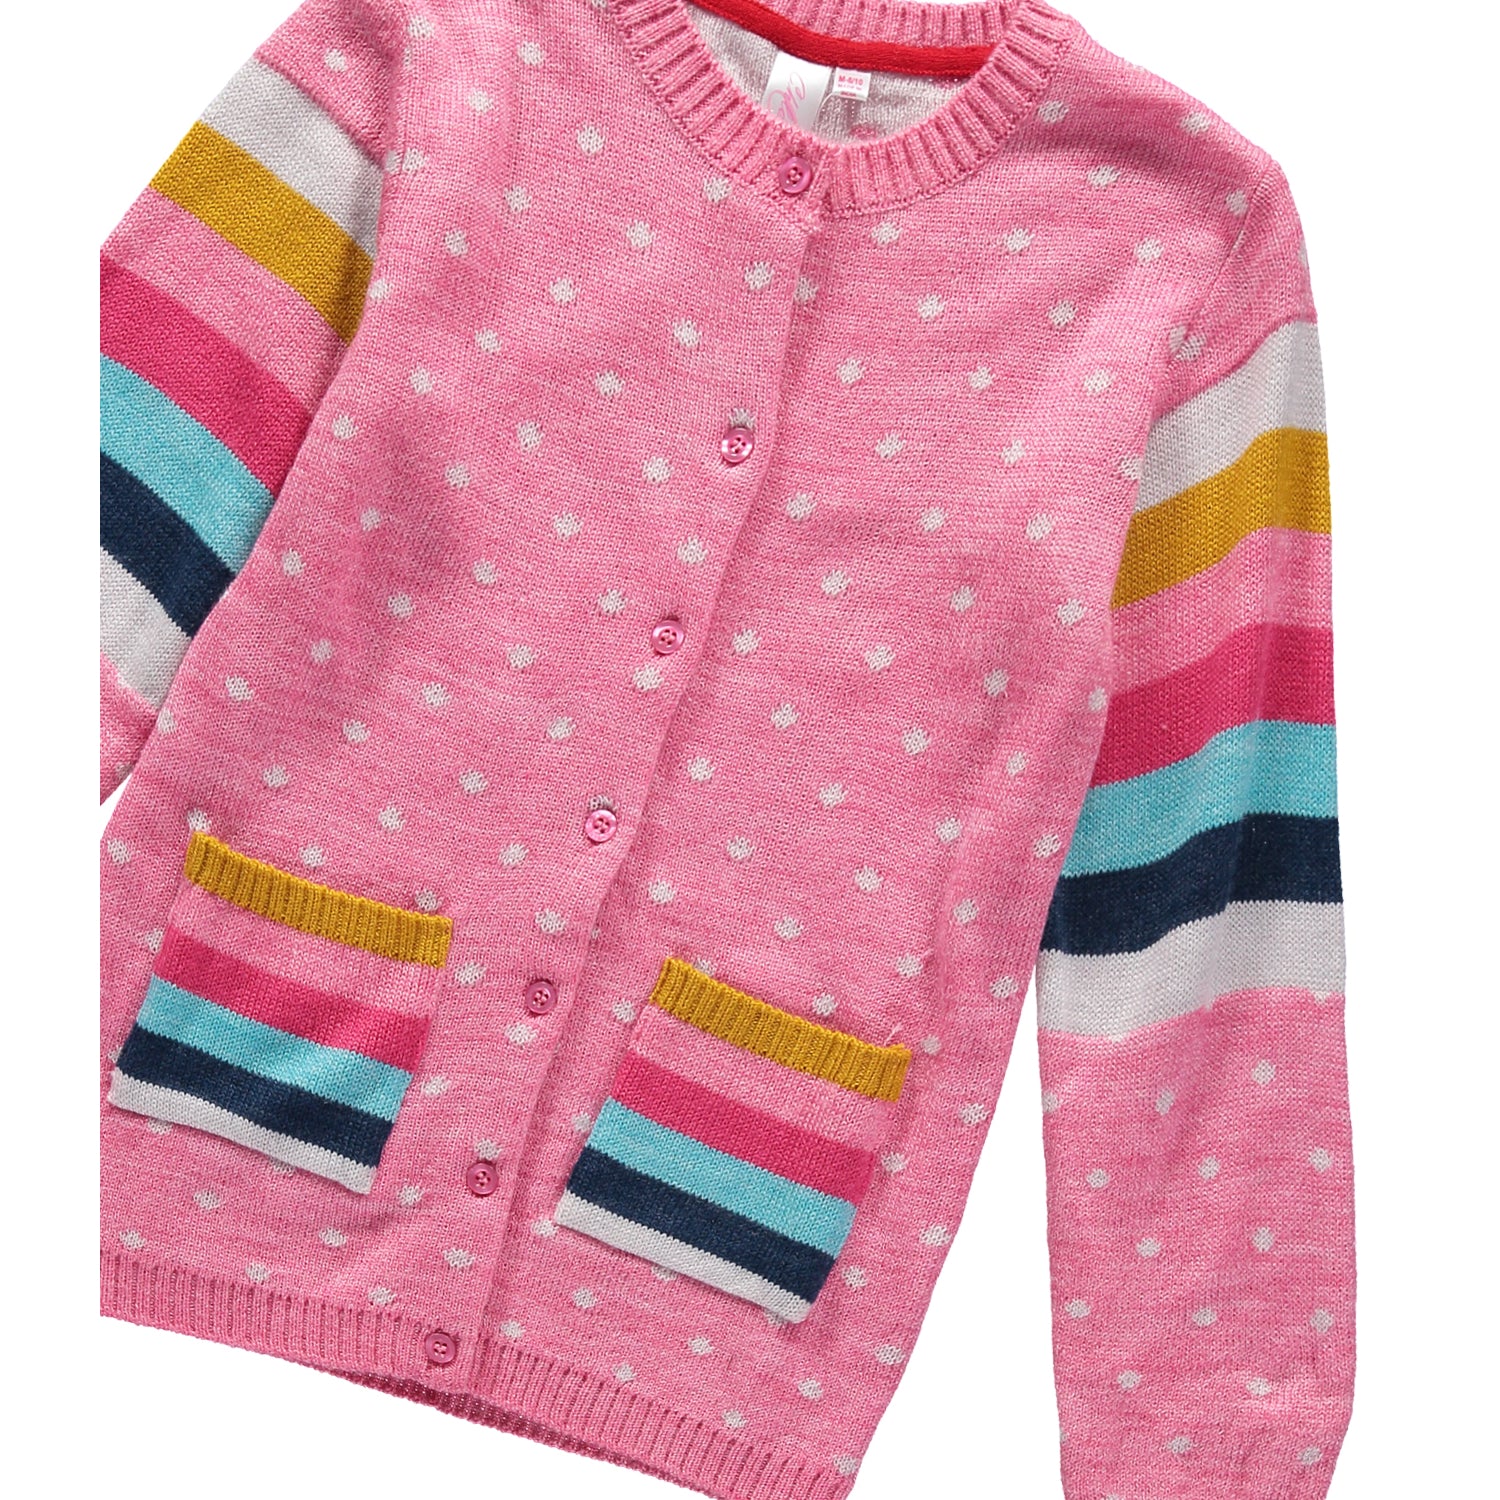 Cyndeelee Girls 2-16 Button Up Polka Dot Cardigan Sweater